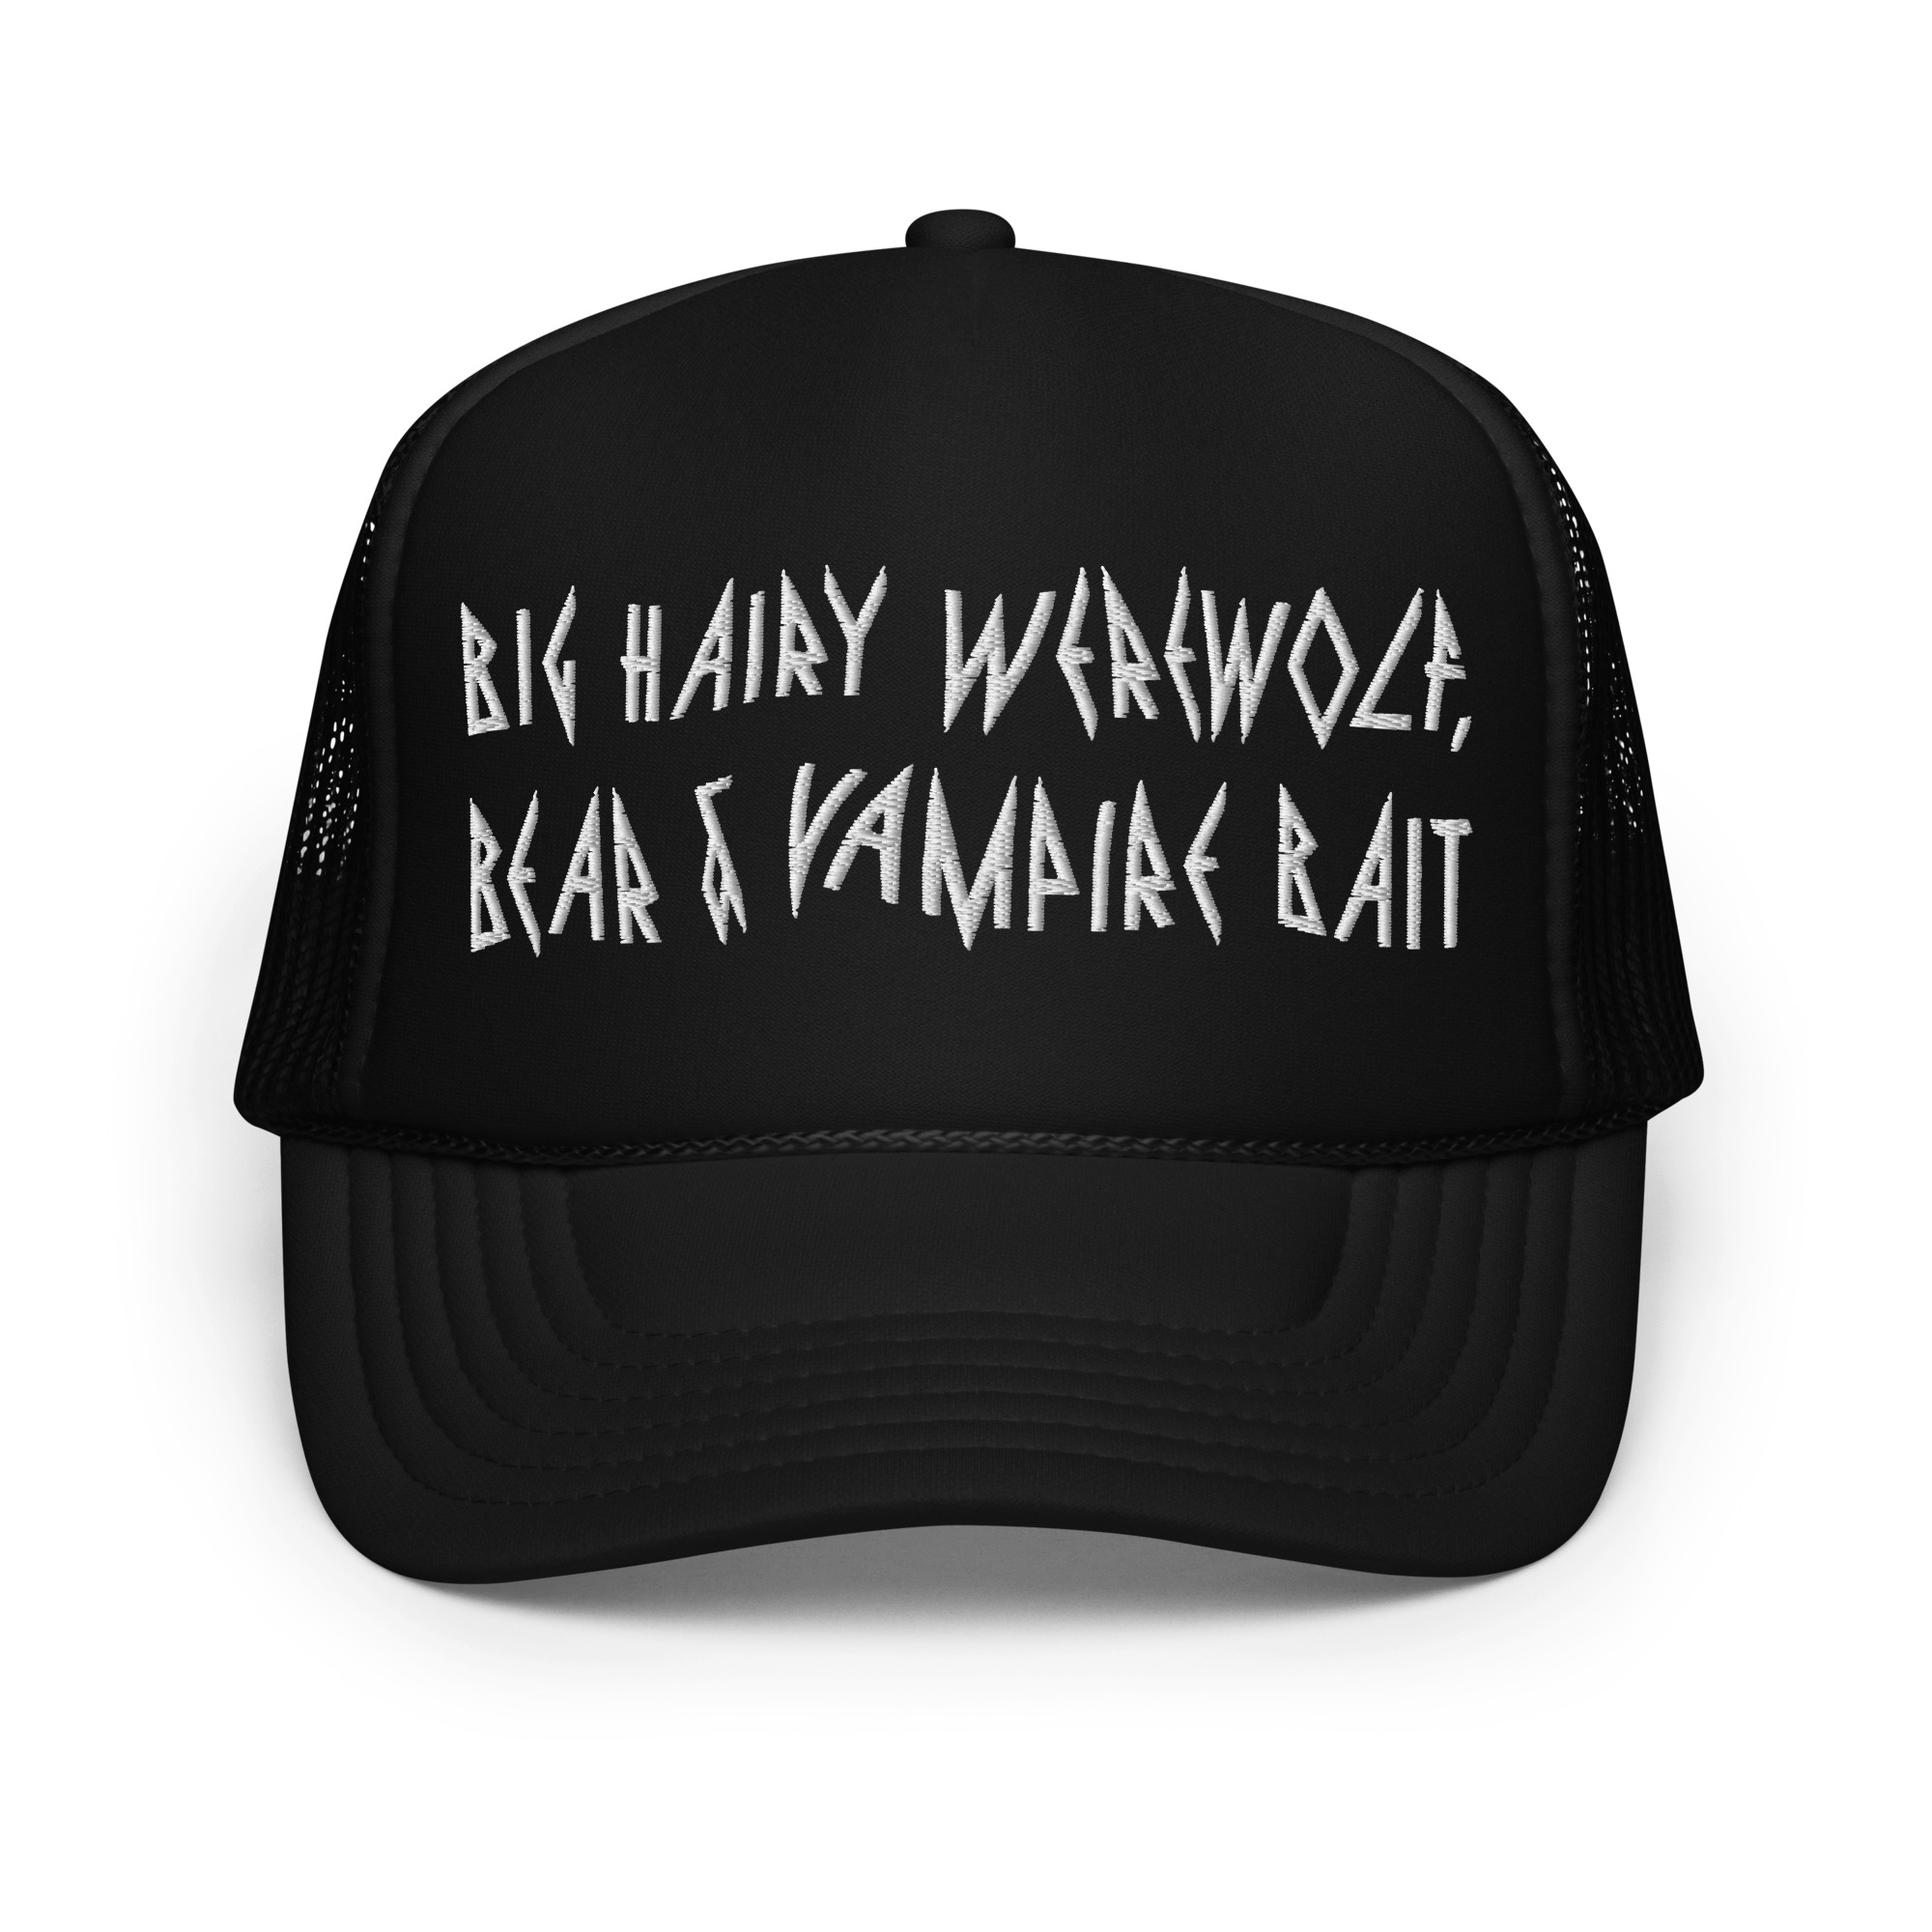 Big Hairy Werewolf, Bear & Vampire Bait - Foam trucker hat